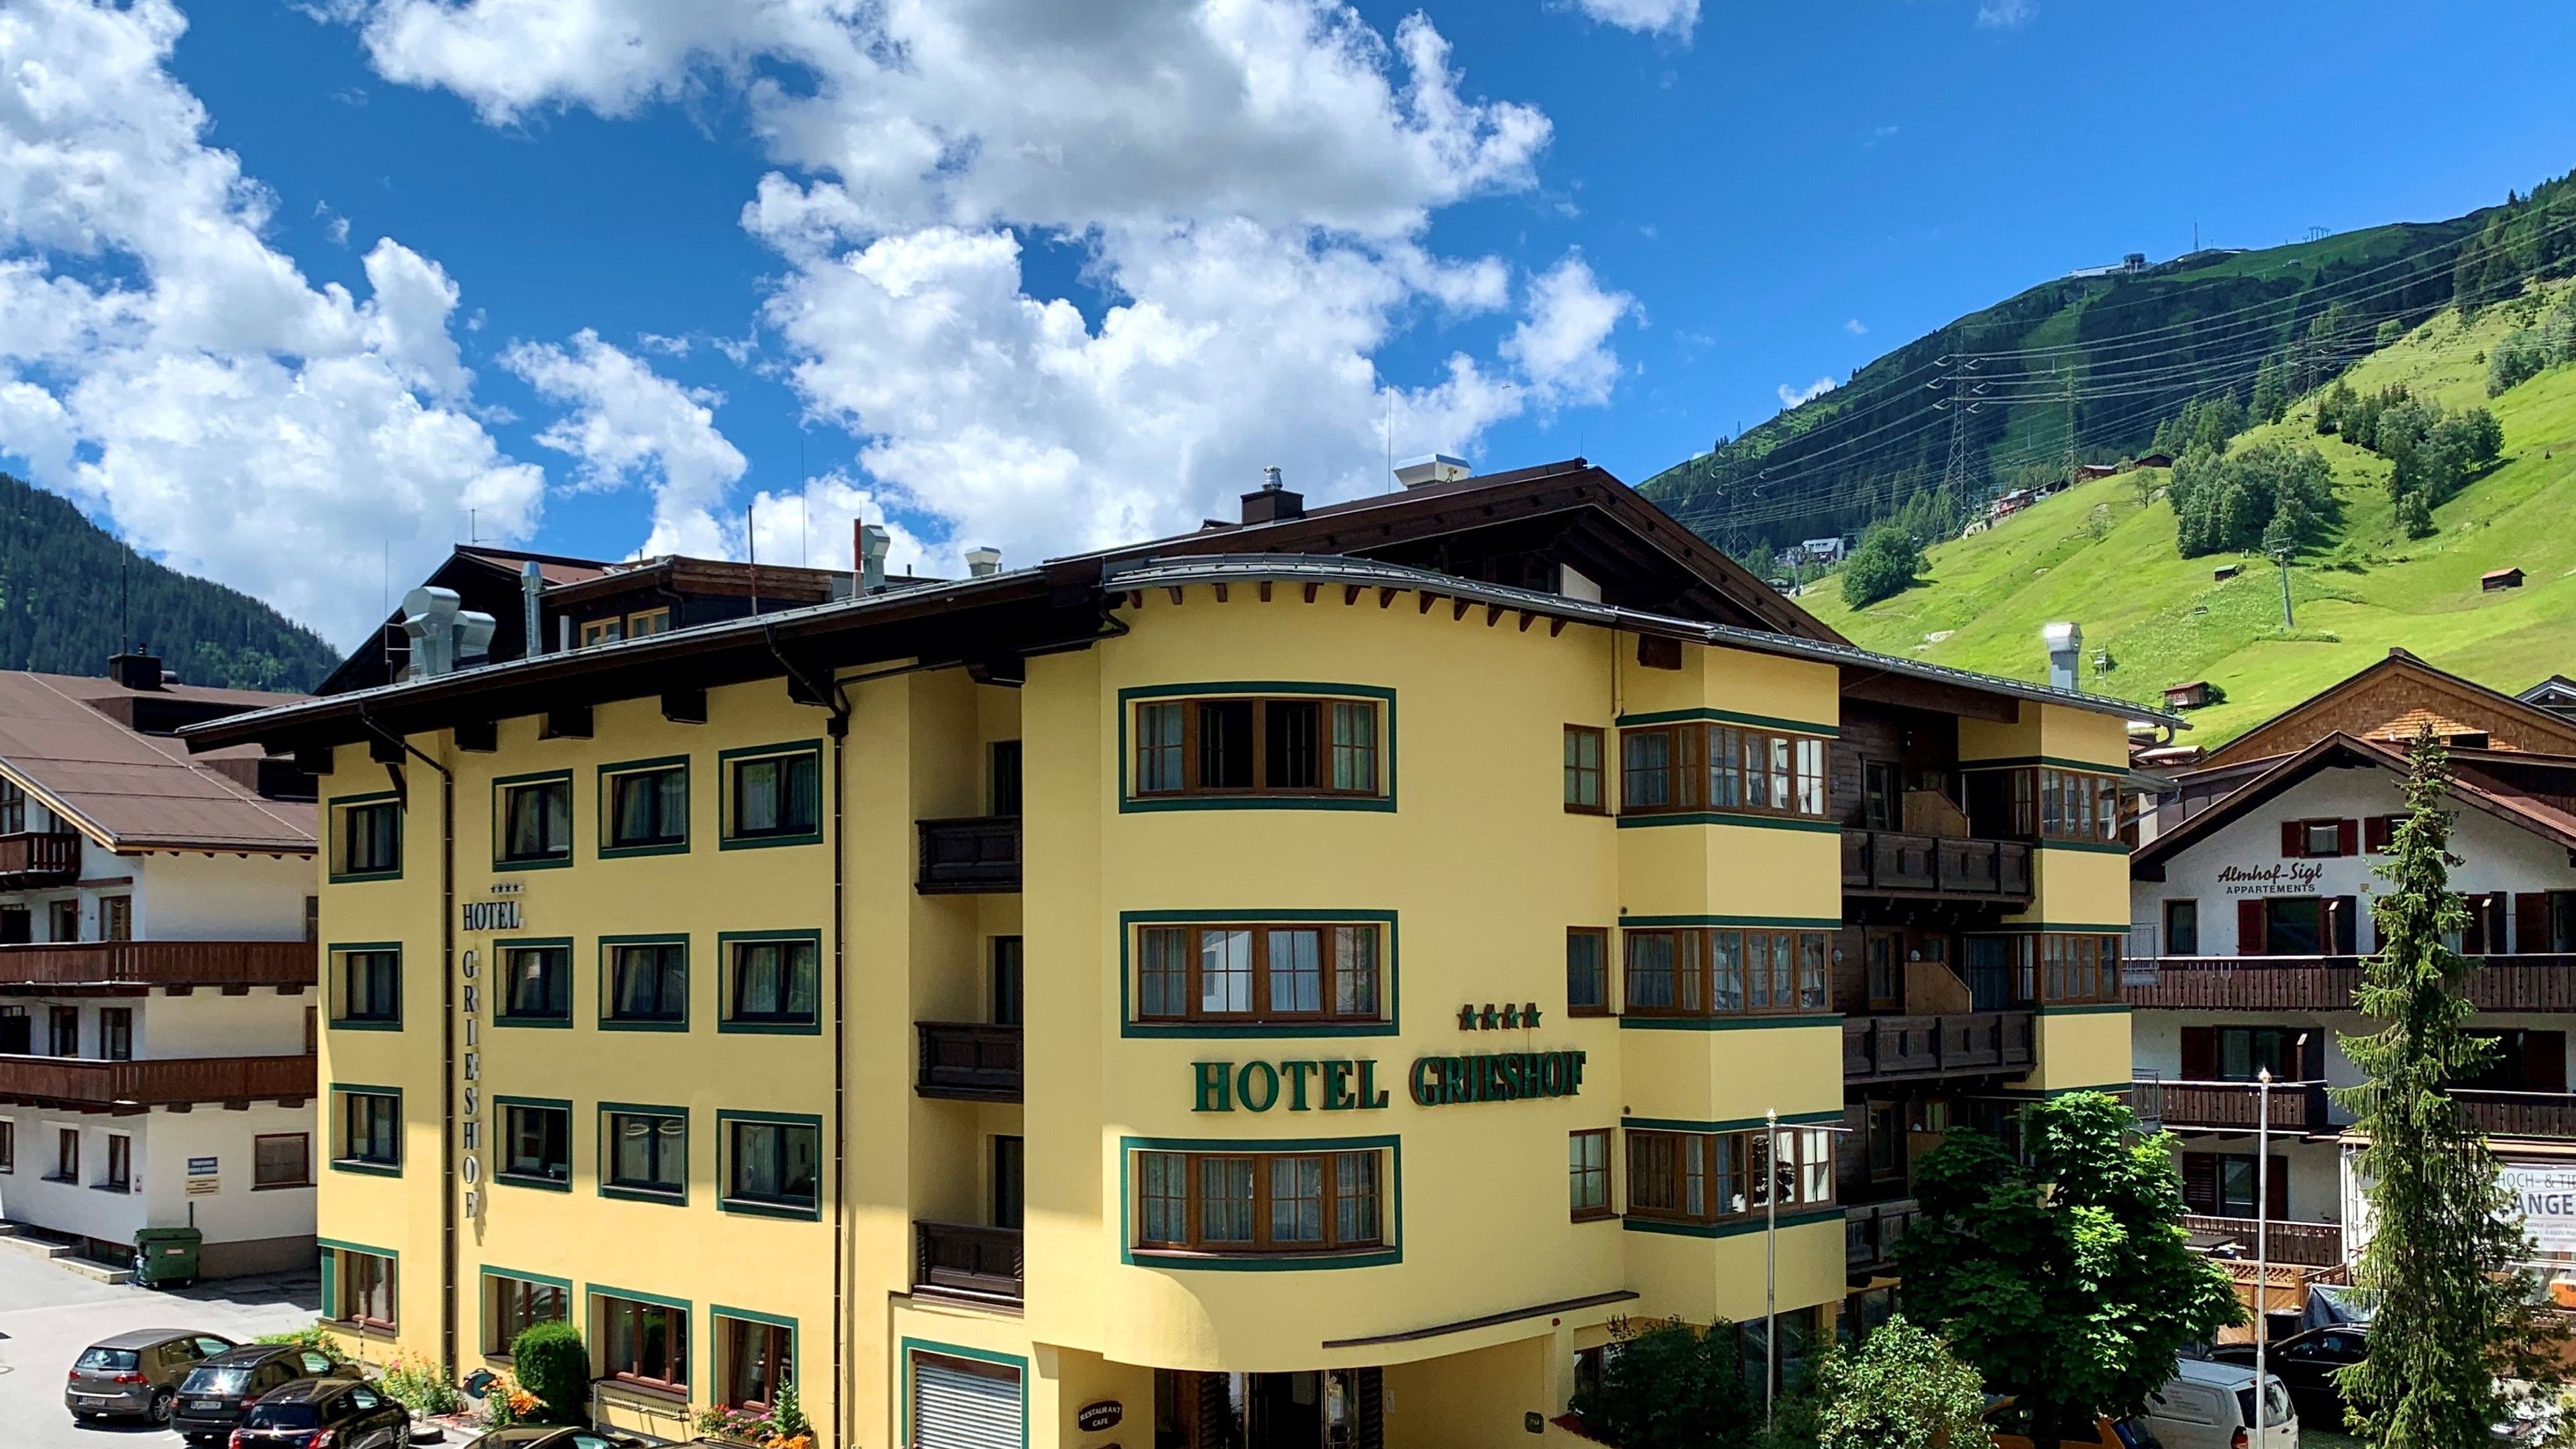 Hotel Grieshof St. Anton am Arlberg